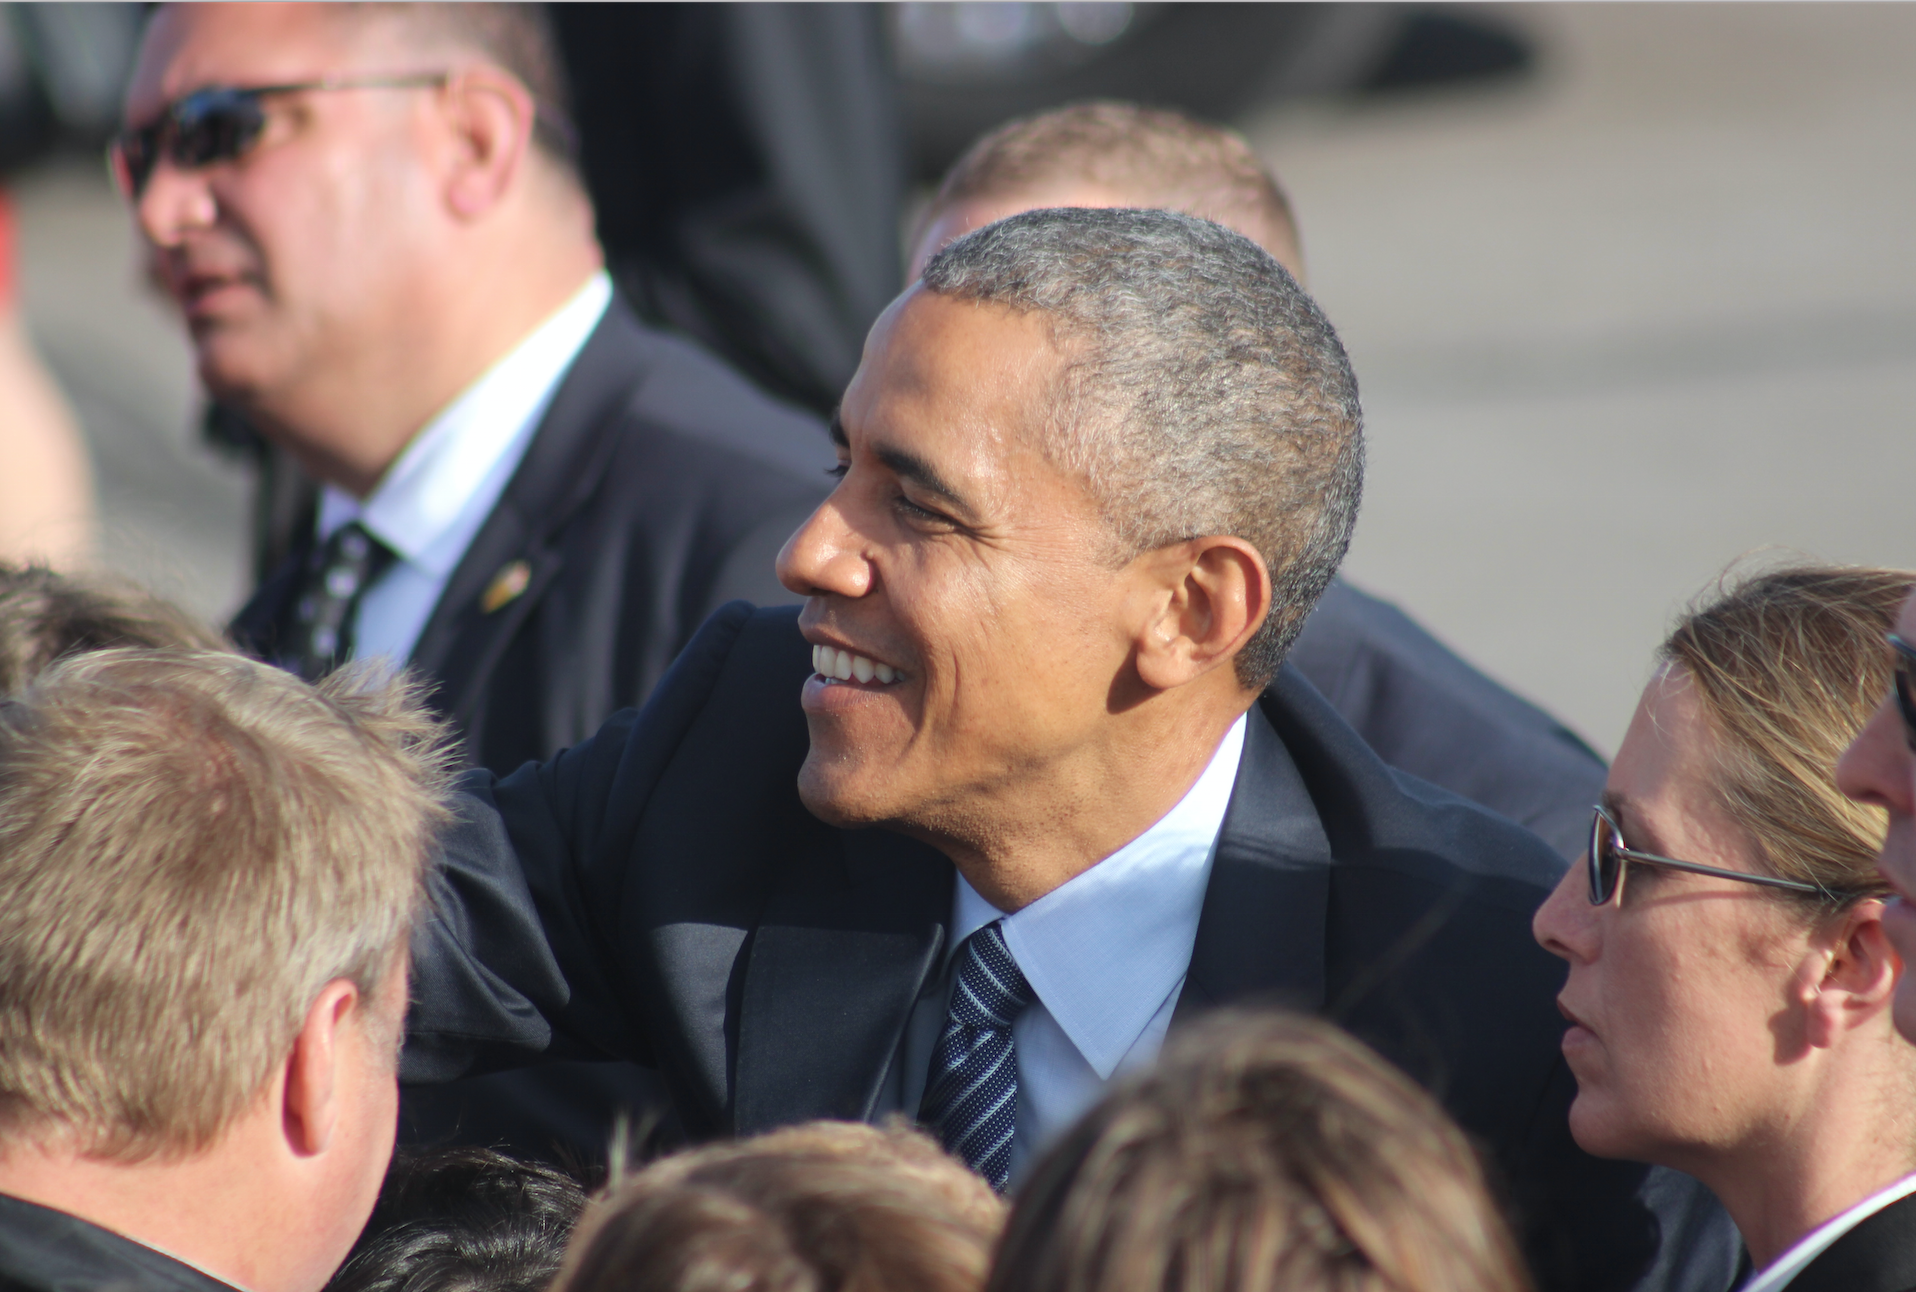 VIDEO: President Obama visits South Dakota, says community college should be free